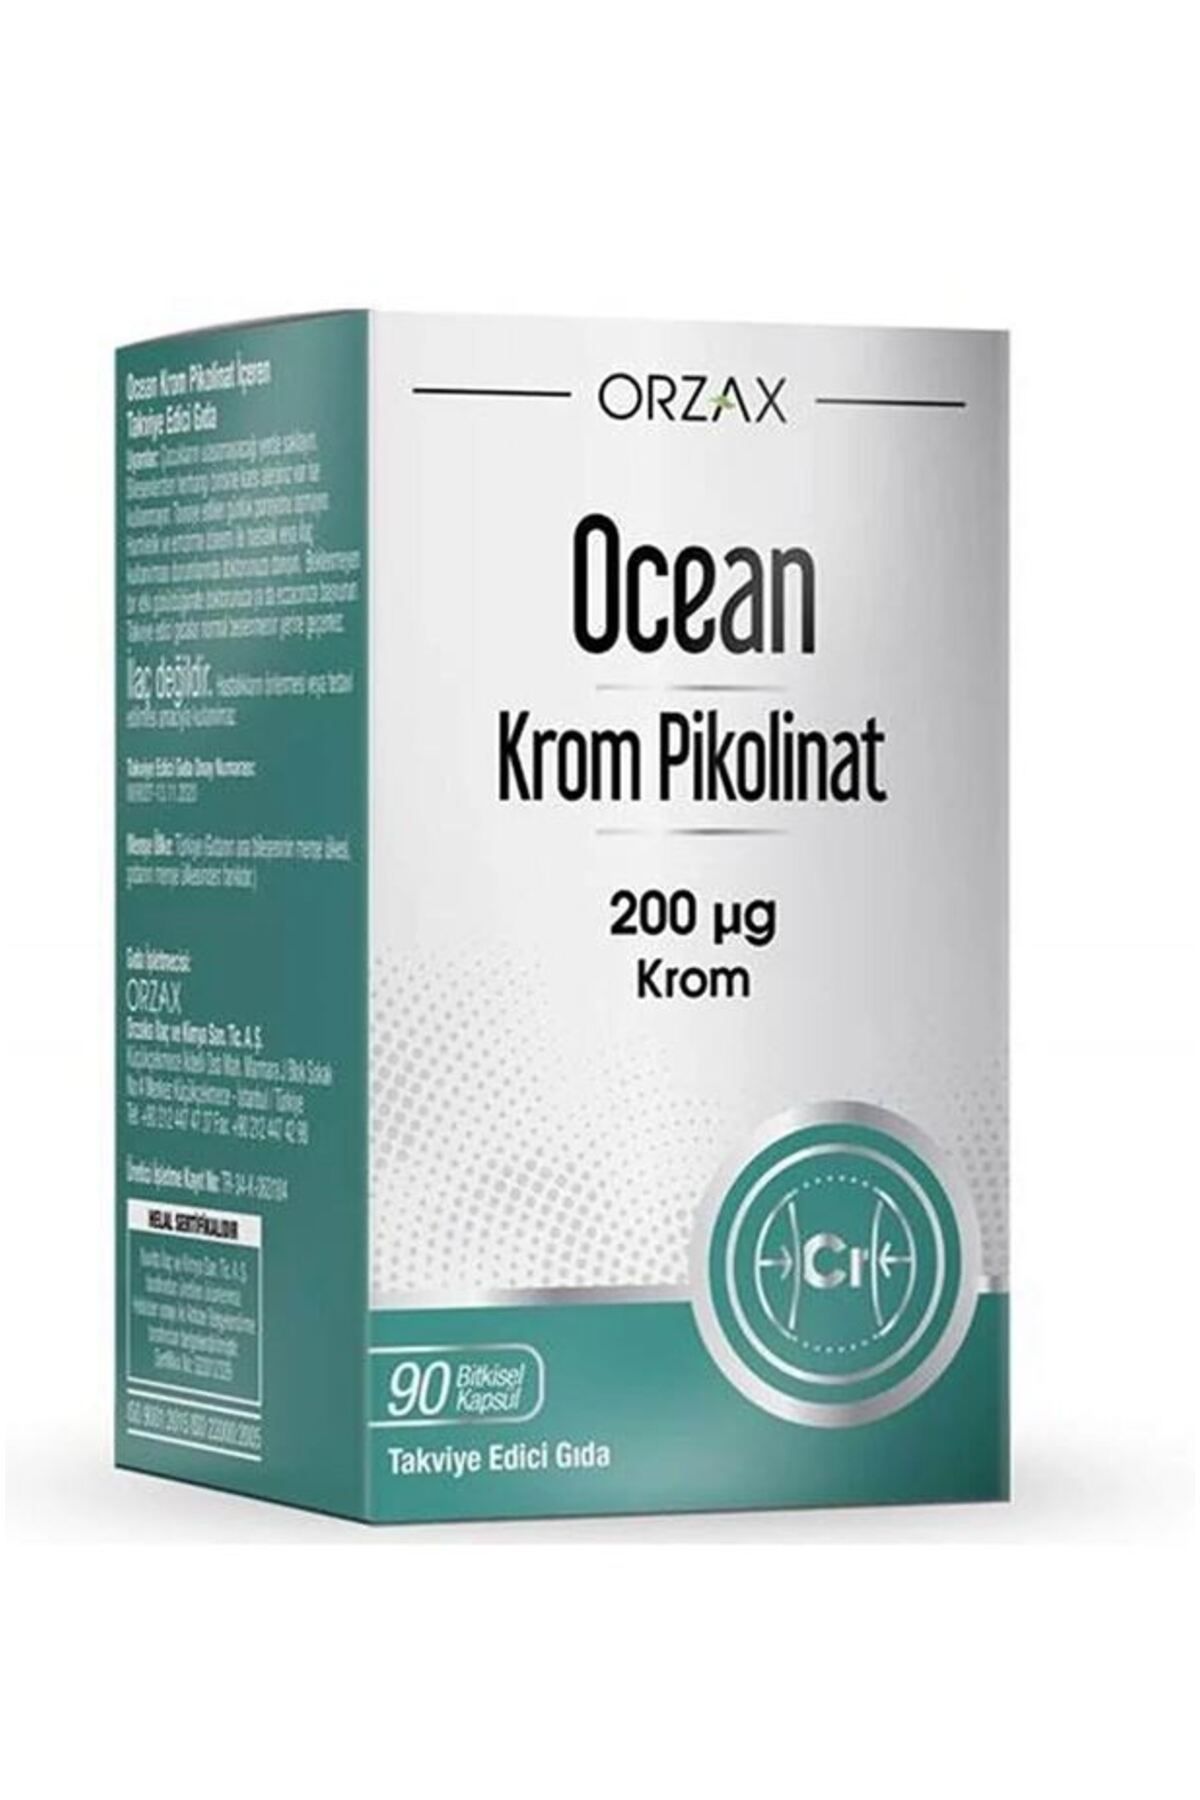 Orzax Ocean Krom Pikolinat 200 Mcg 90 Kapsül